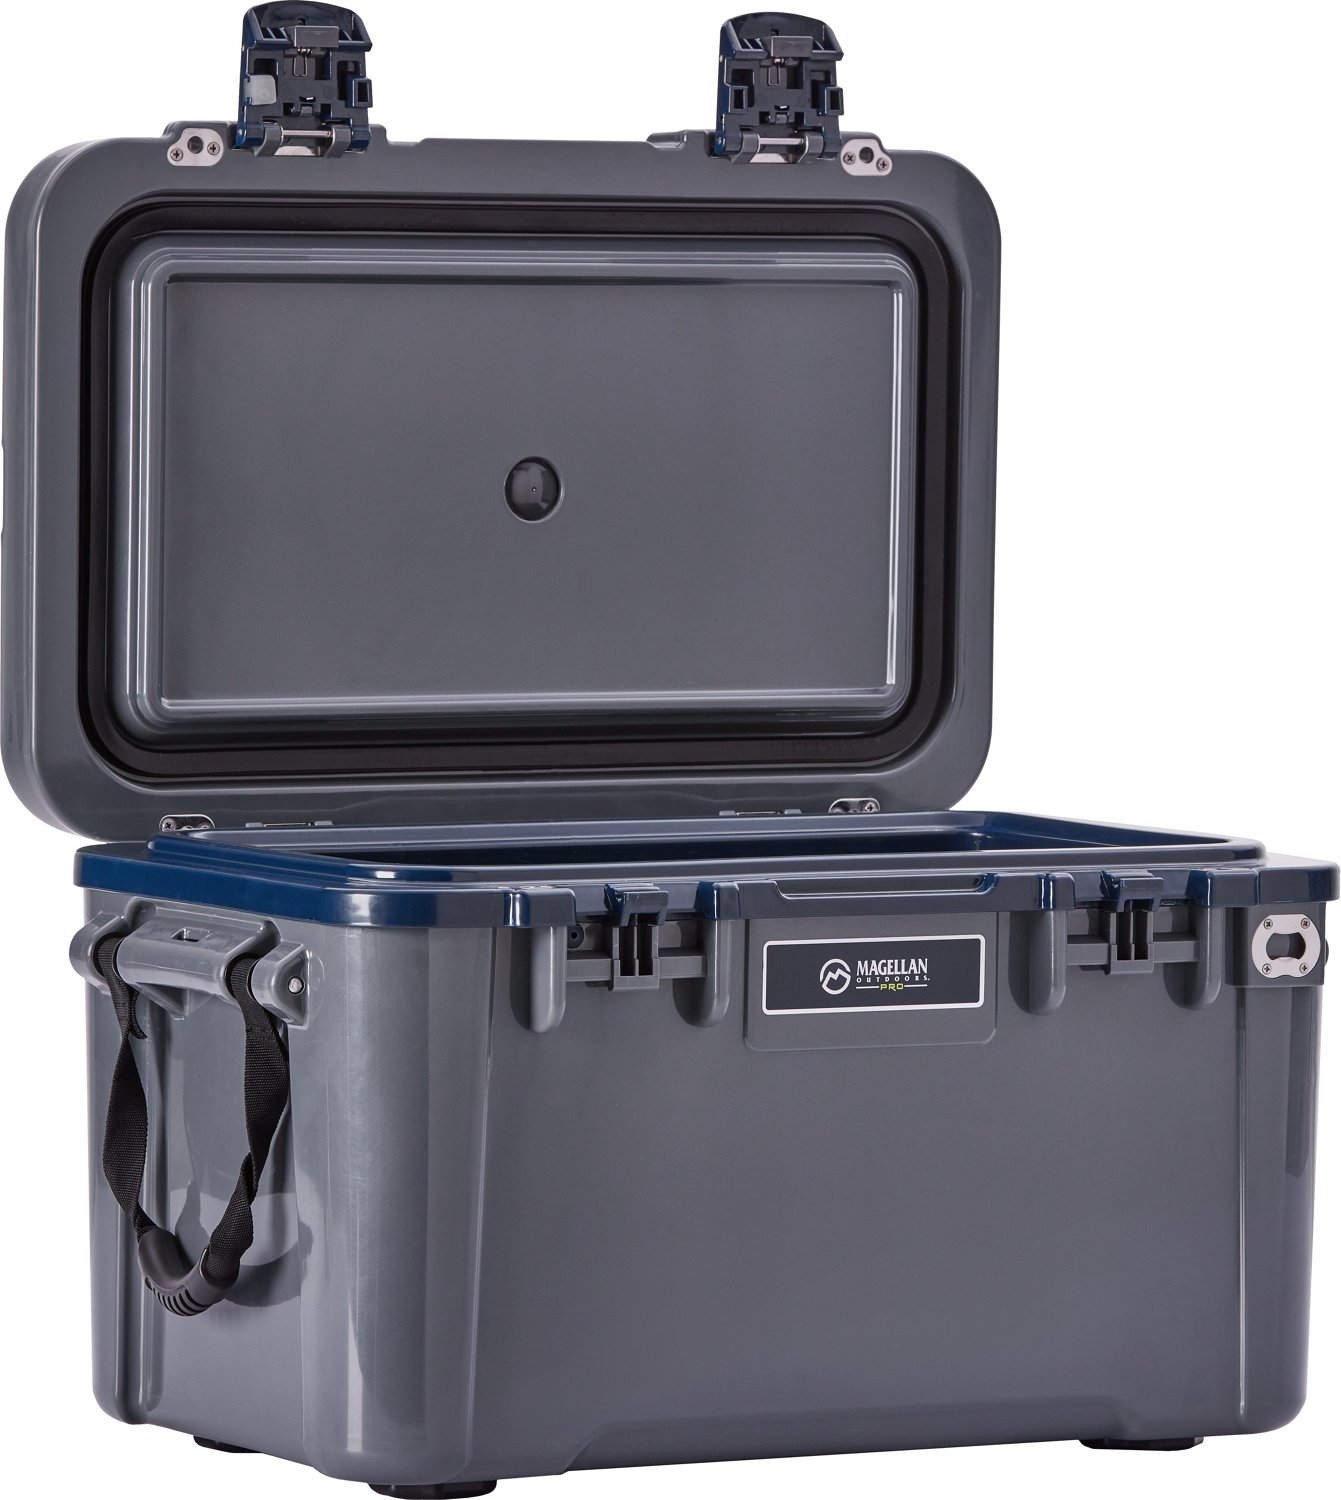 Magellan Outdoors Pro Explore IceBox 35 Cooler | Academy